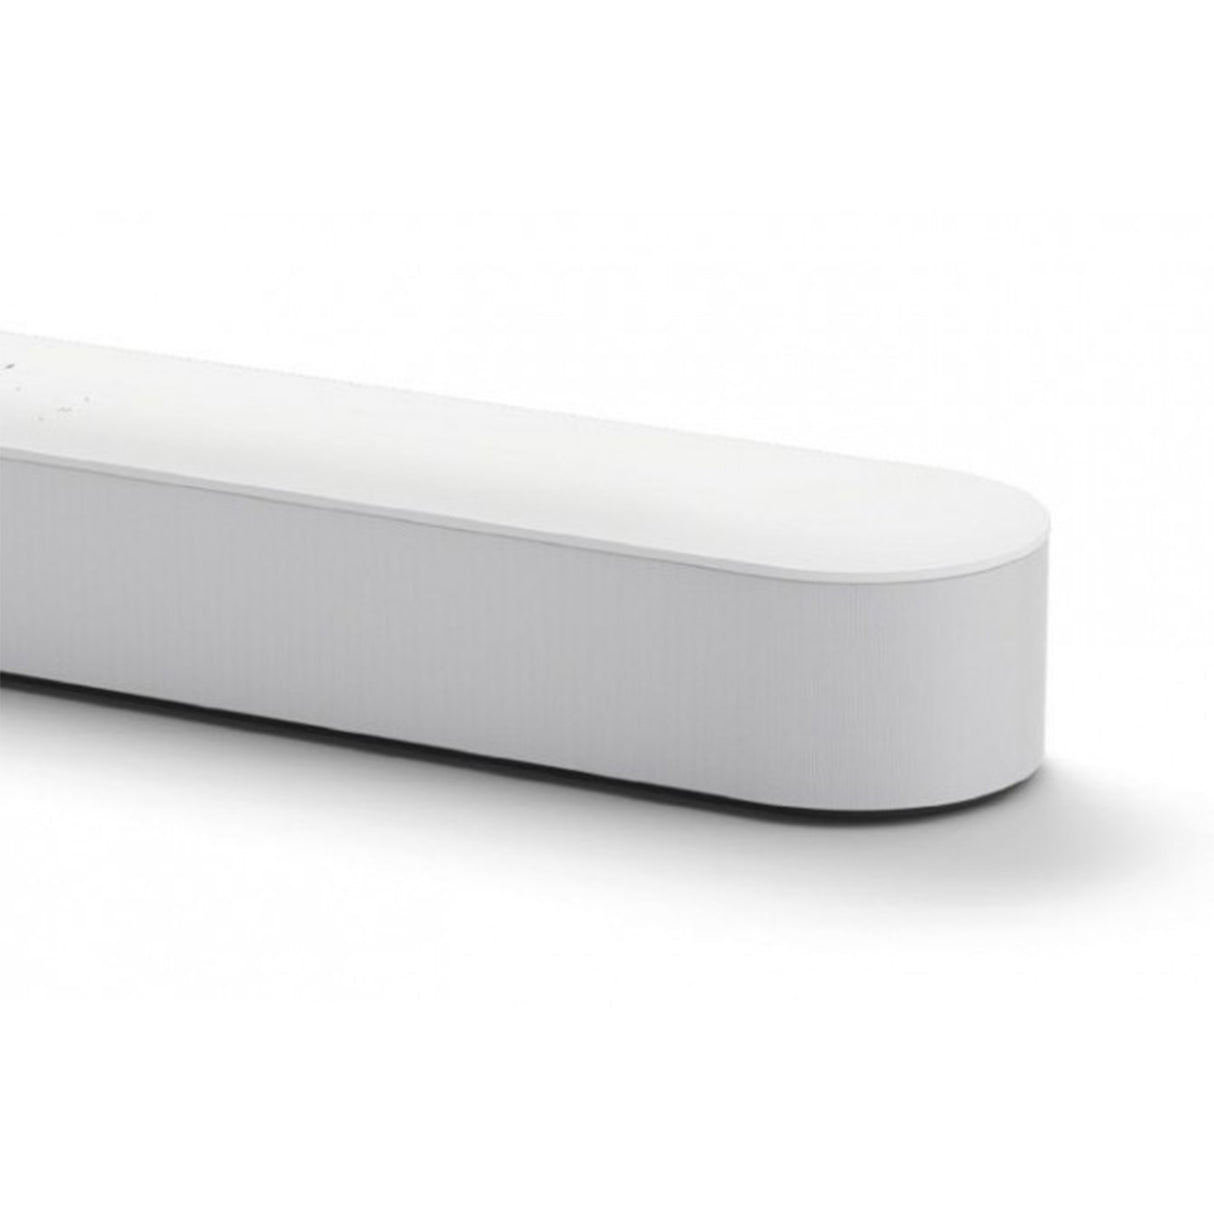 Sonos Beam -Compact Wireless Soundbar